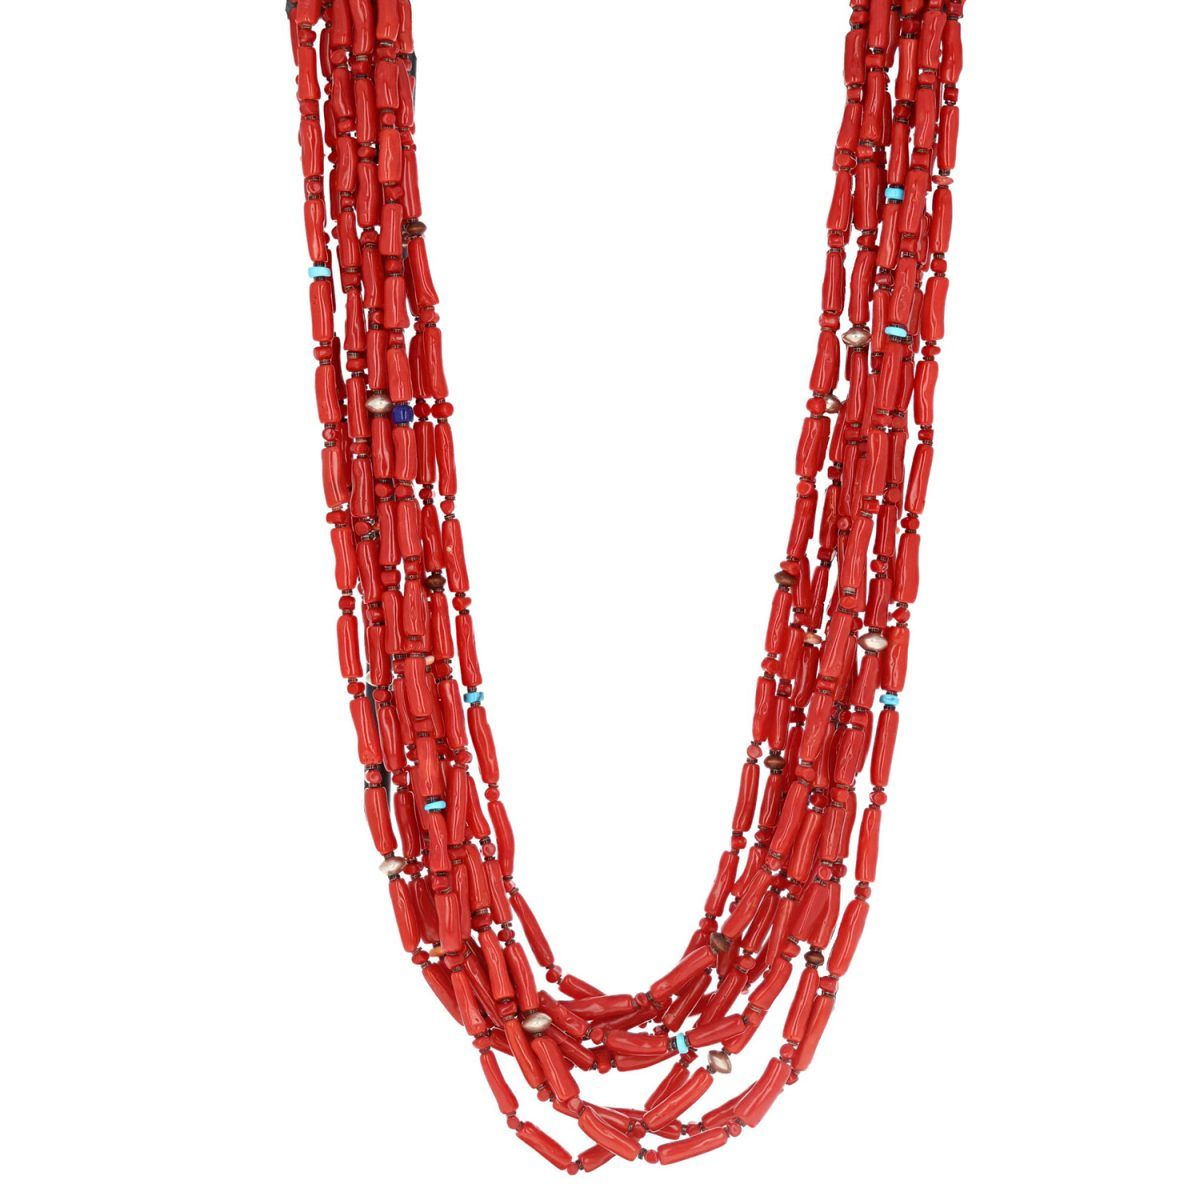 Native American Jewelry Coral Necklace C4563 - Adobe Gallery, Santa Fe